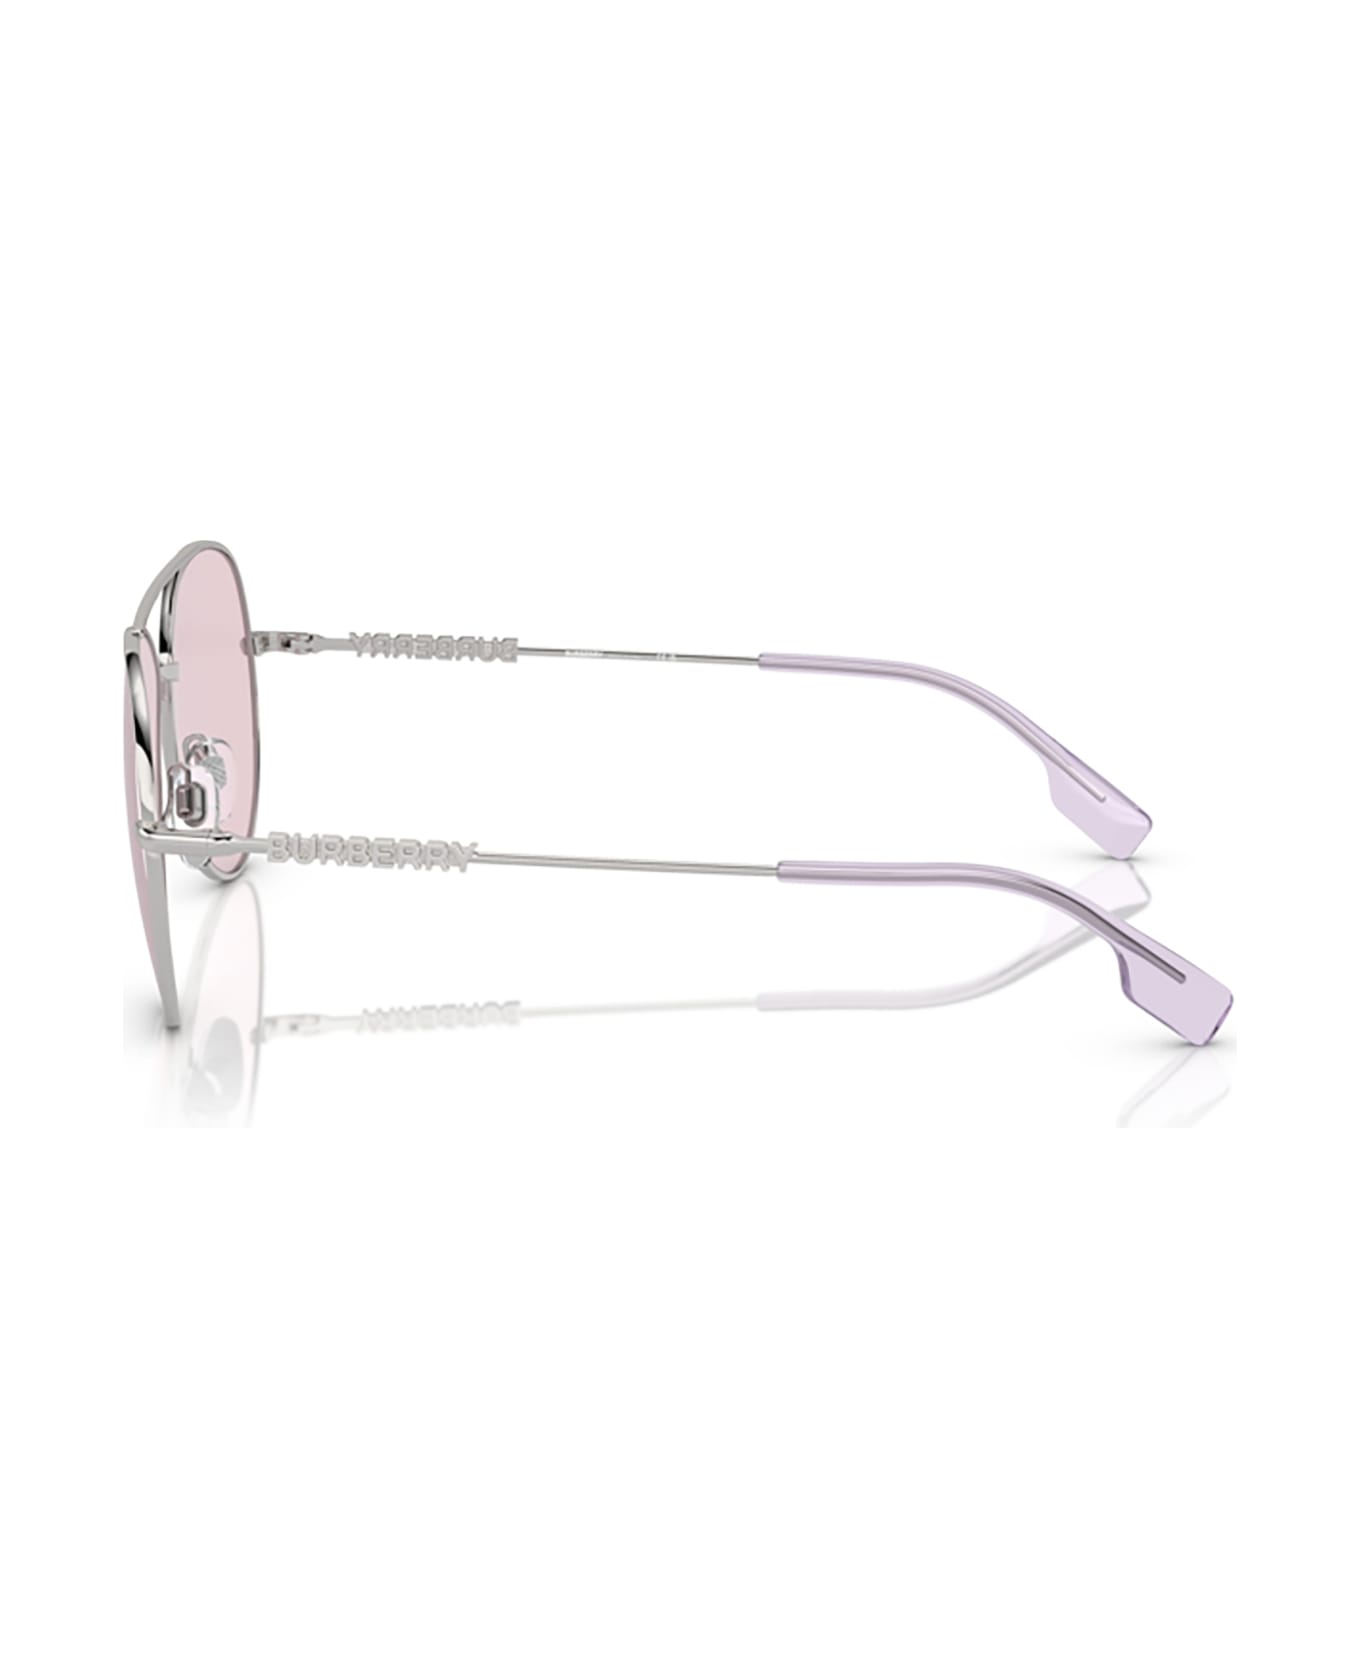 Burberry Eyewear Be3147 Silver Sunglasses - Silver